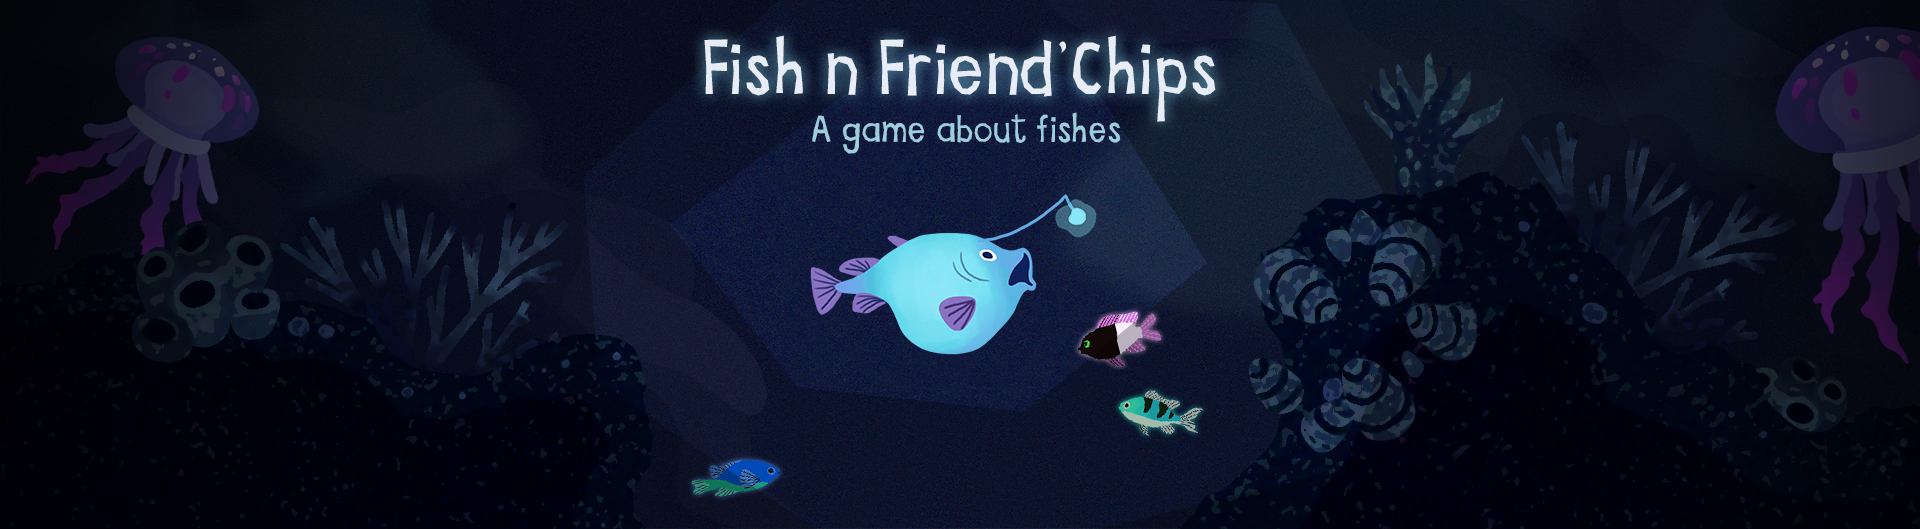 Fish n Friend'chips